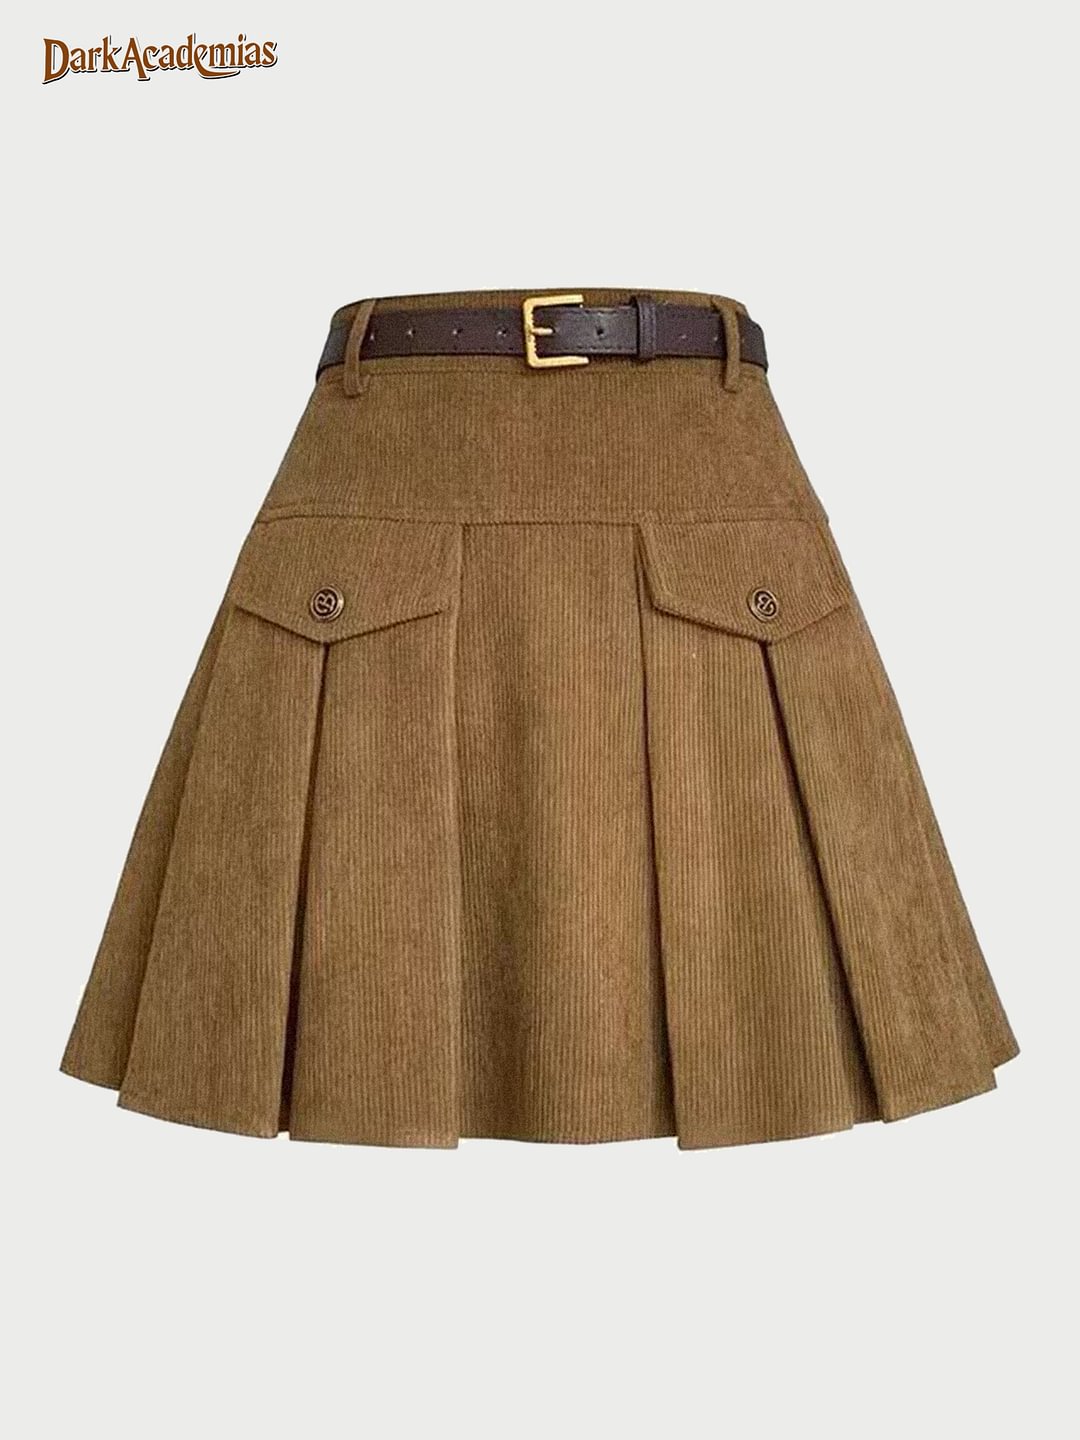 Darkacademias Corduroy Pocket Skirt